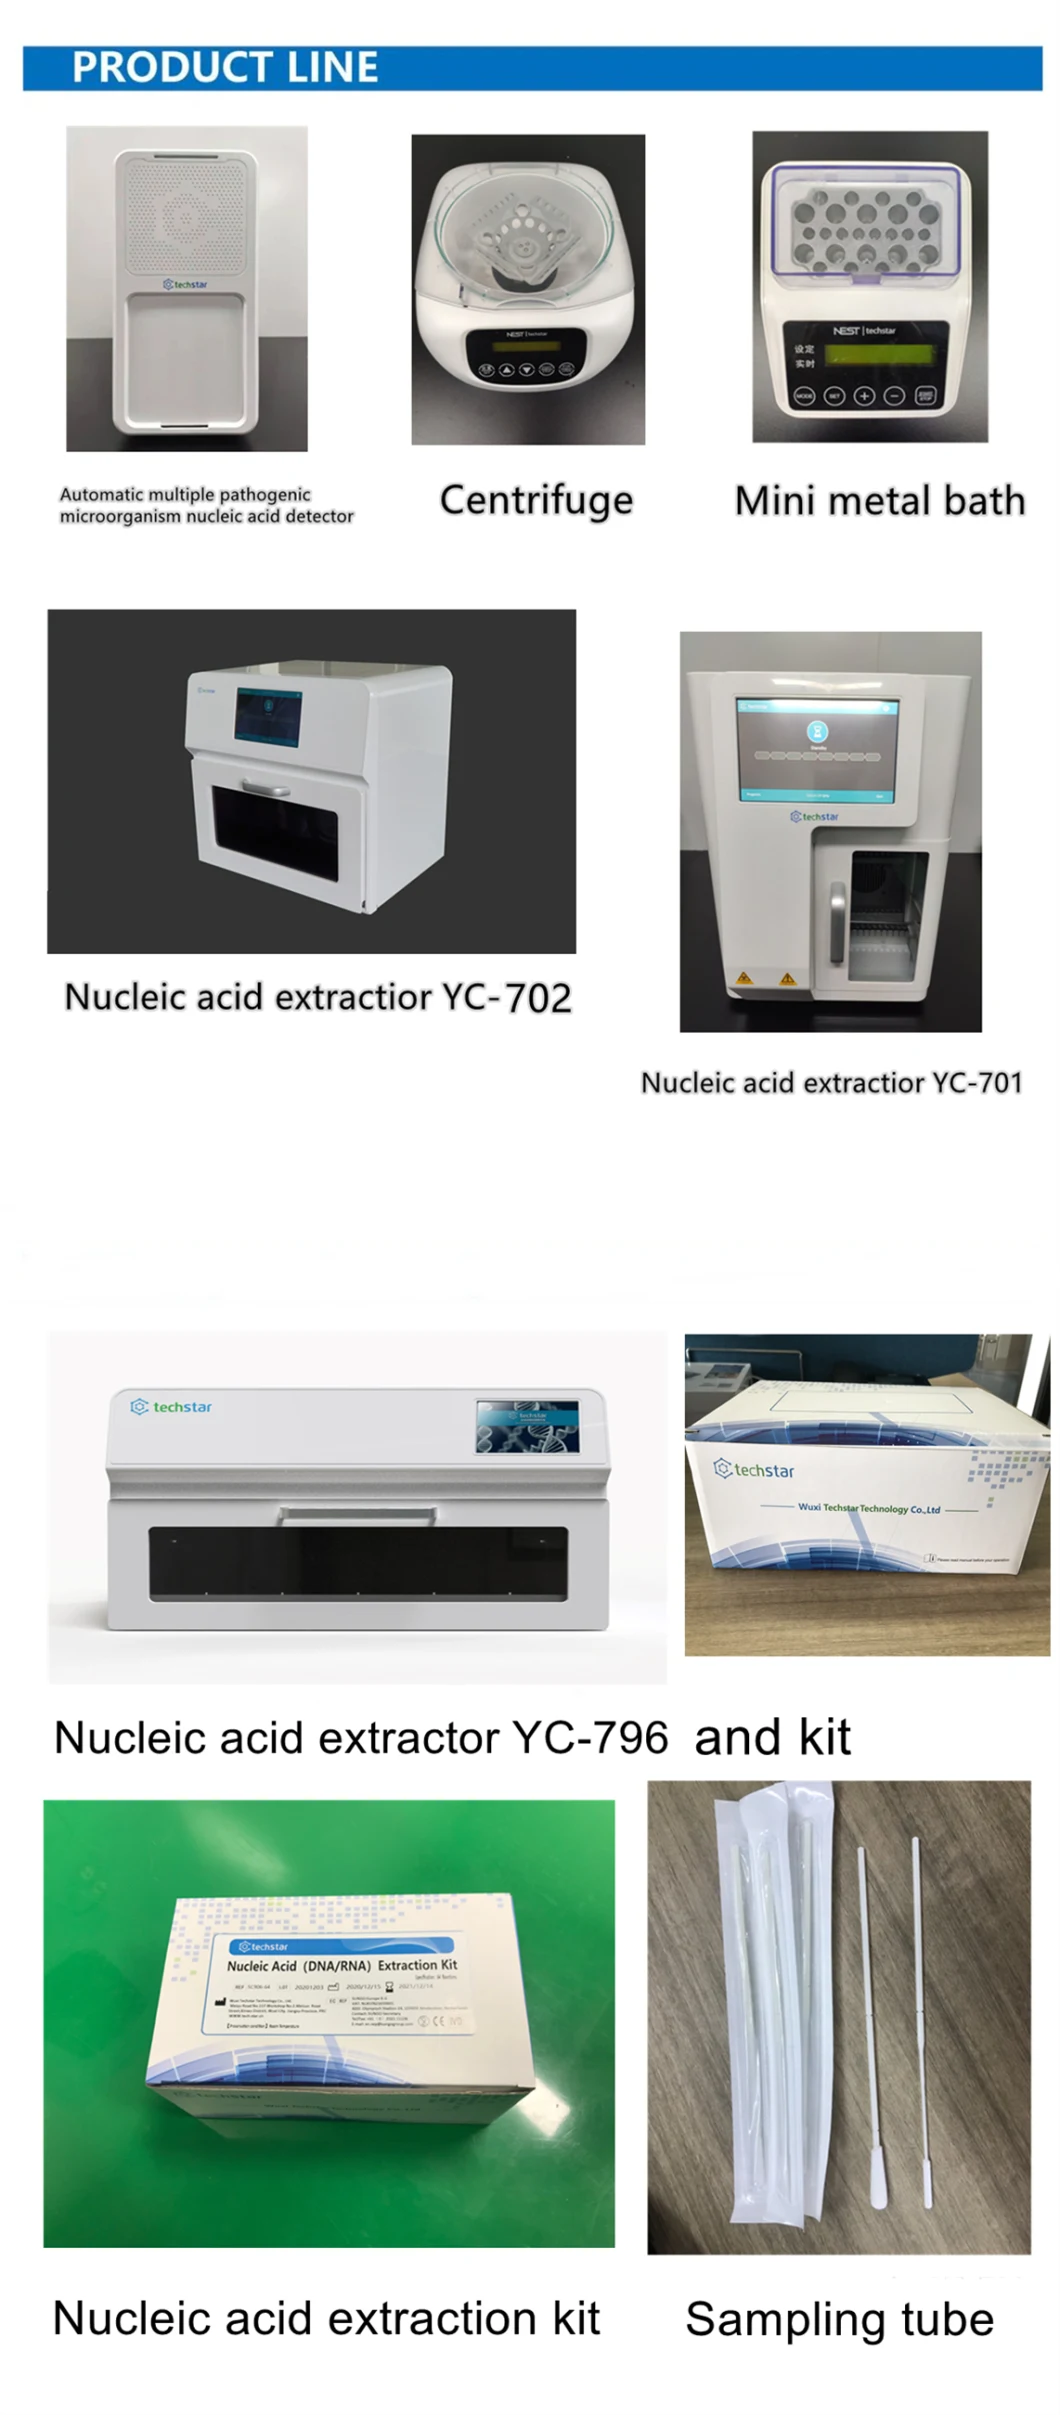 Supply Medical Disposable Sampling Microfiber Virus Swab Saliva Collection Test Kits with Tubes